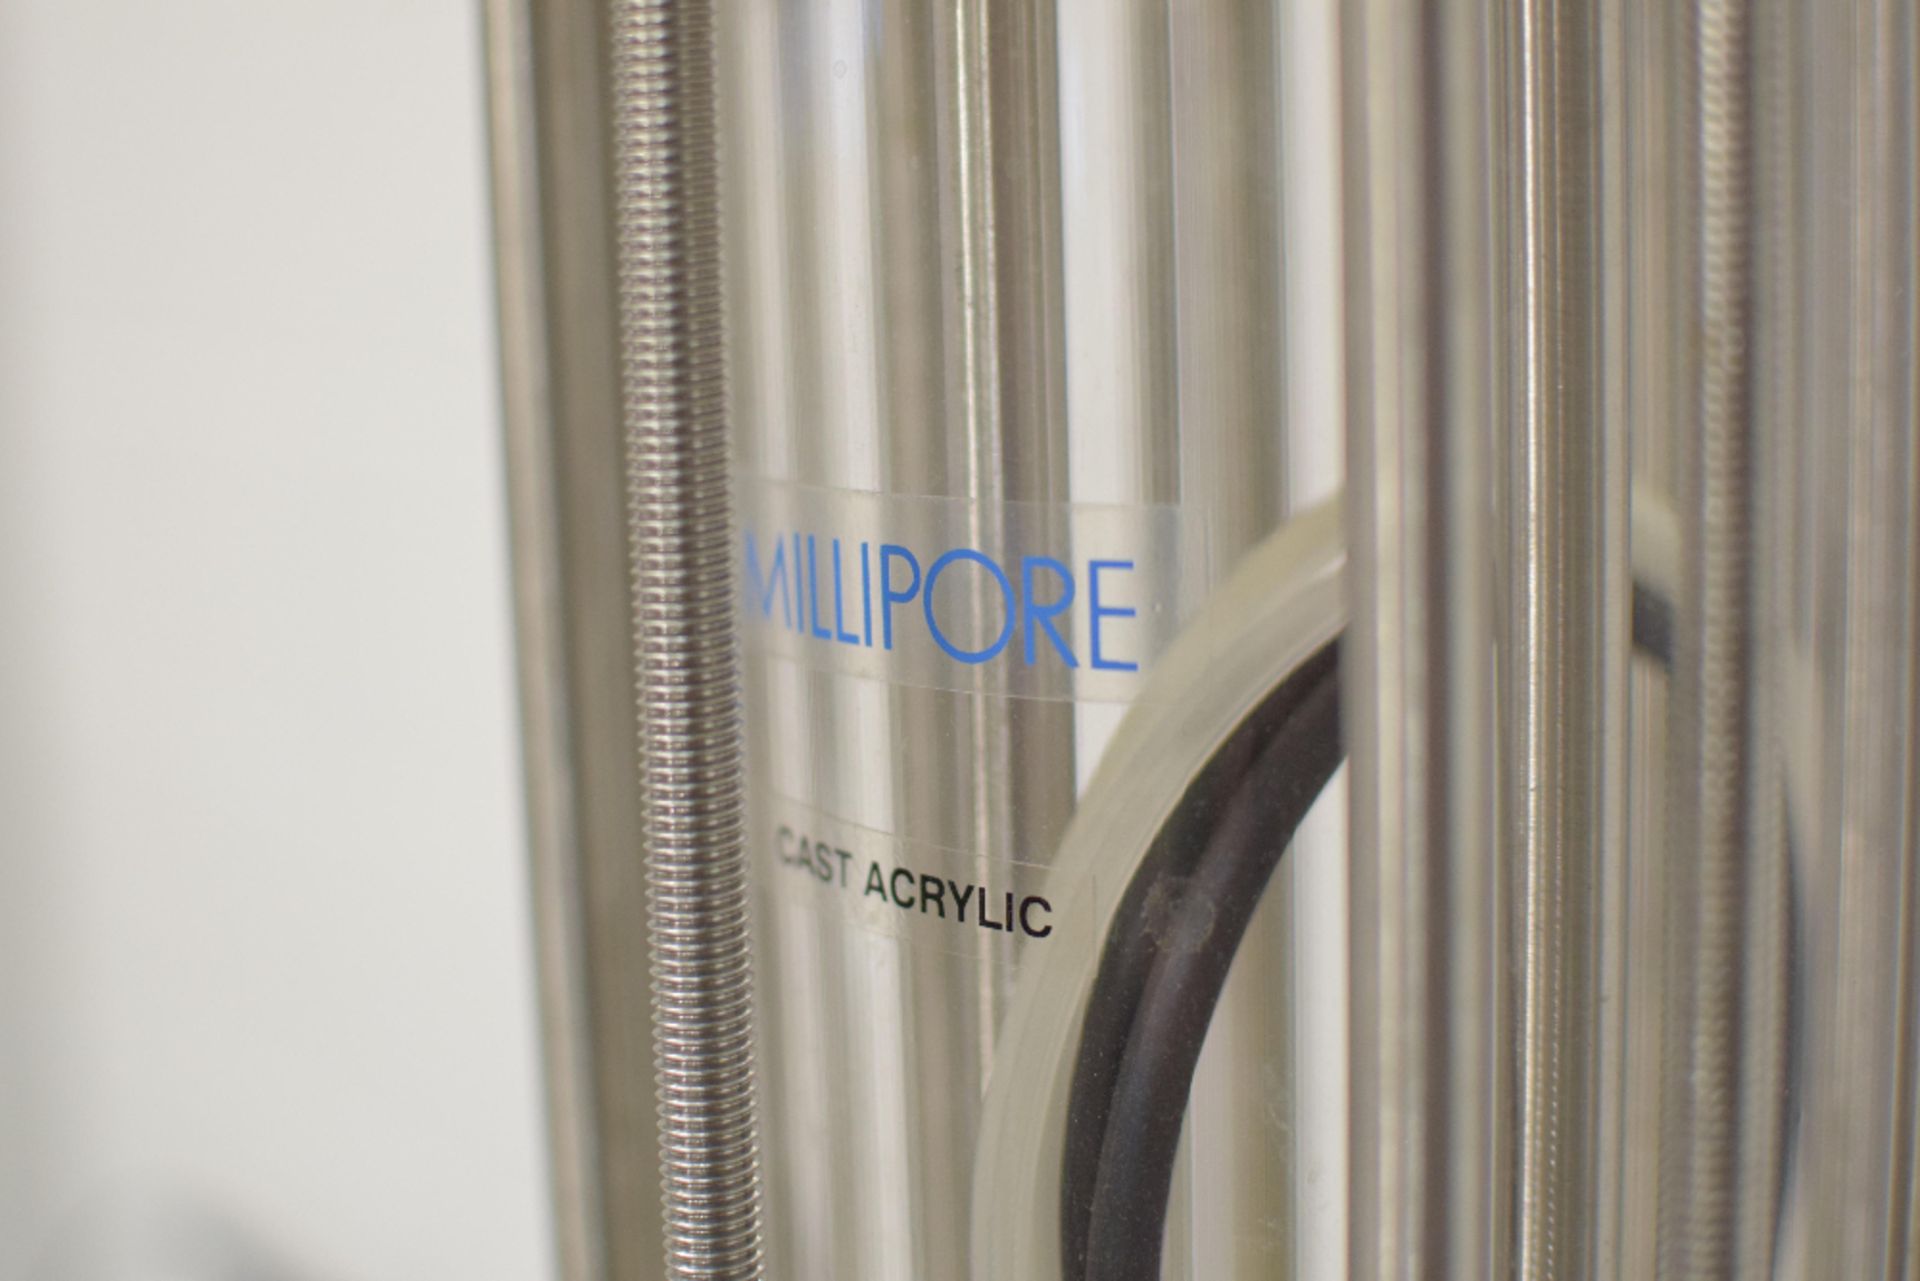 Millipore Cast Acrylic HPLC Chromatography Column - Image 2 of 3